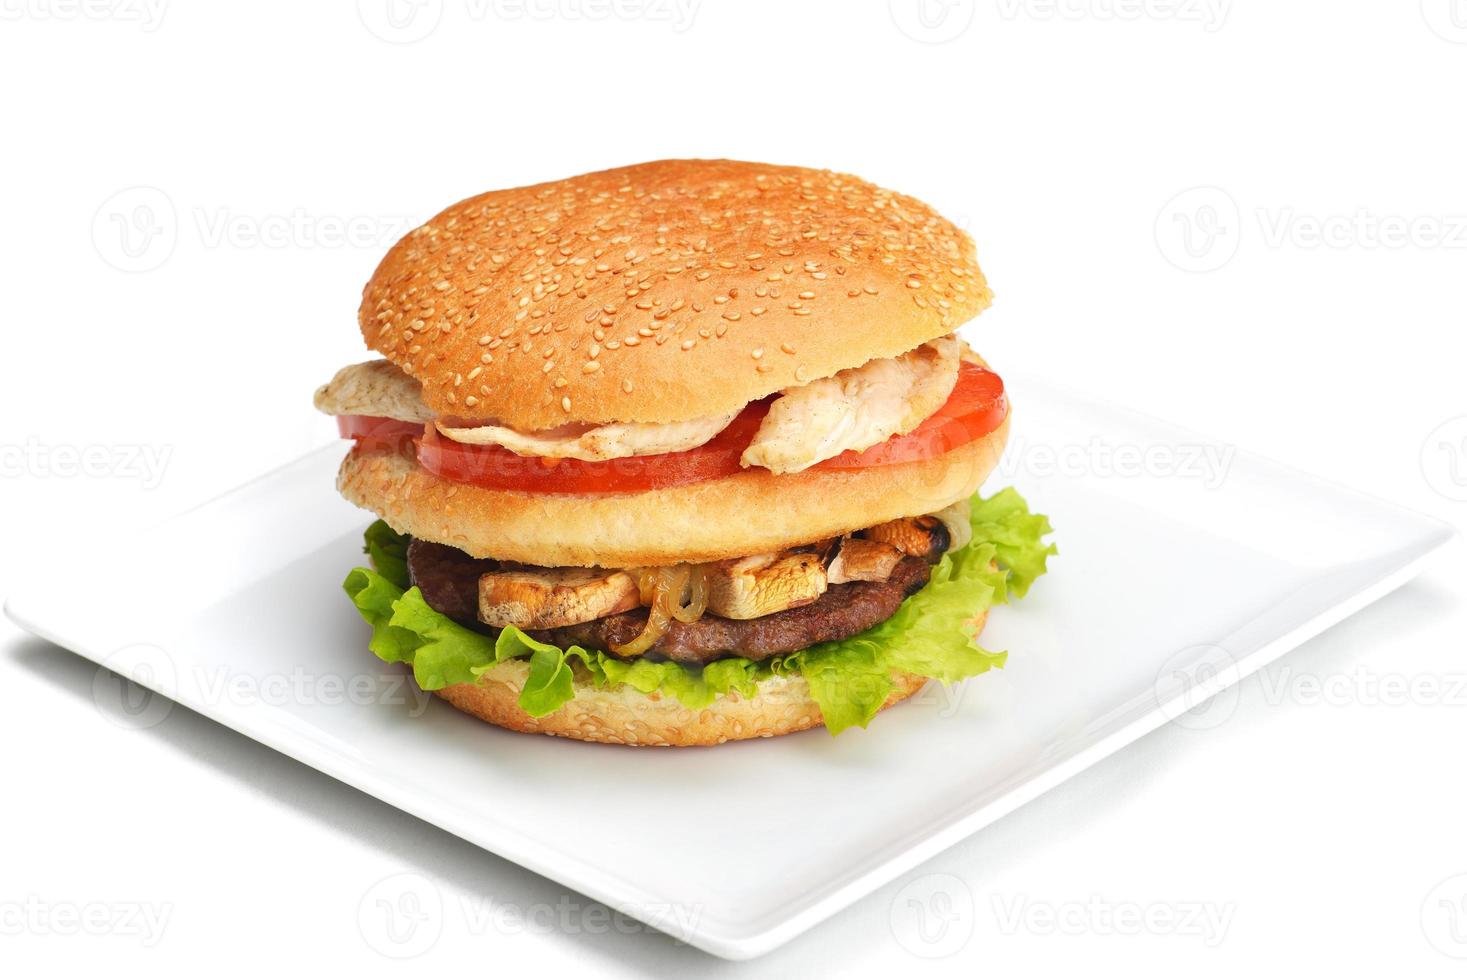 hamburguesa comida rapida foto